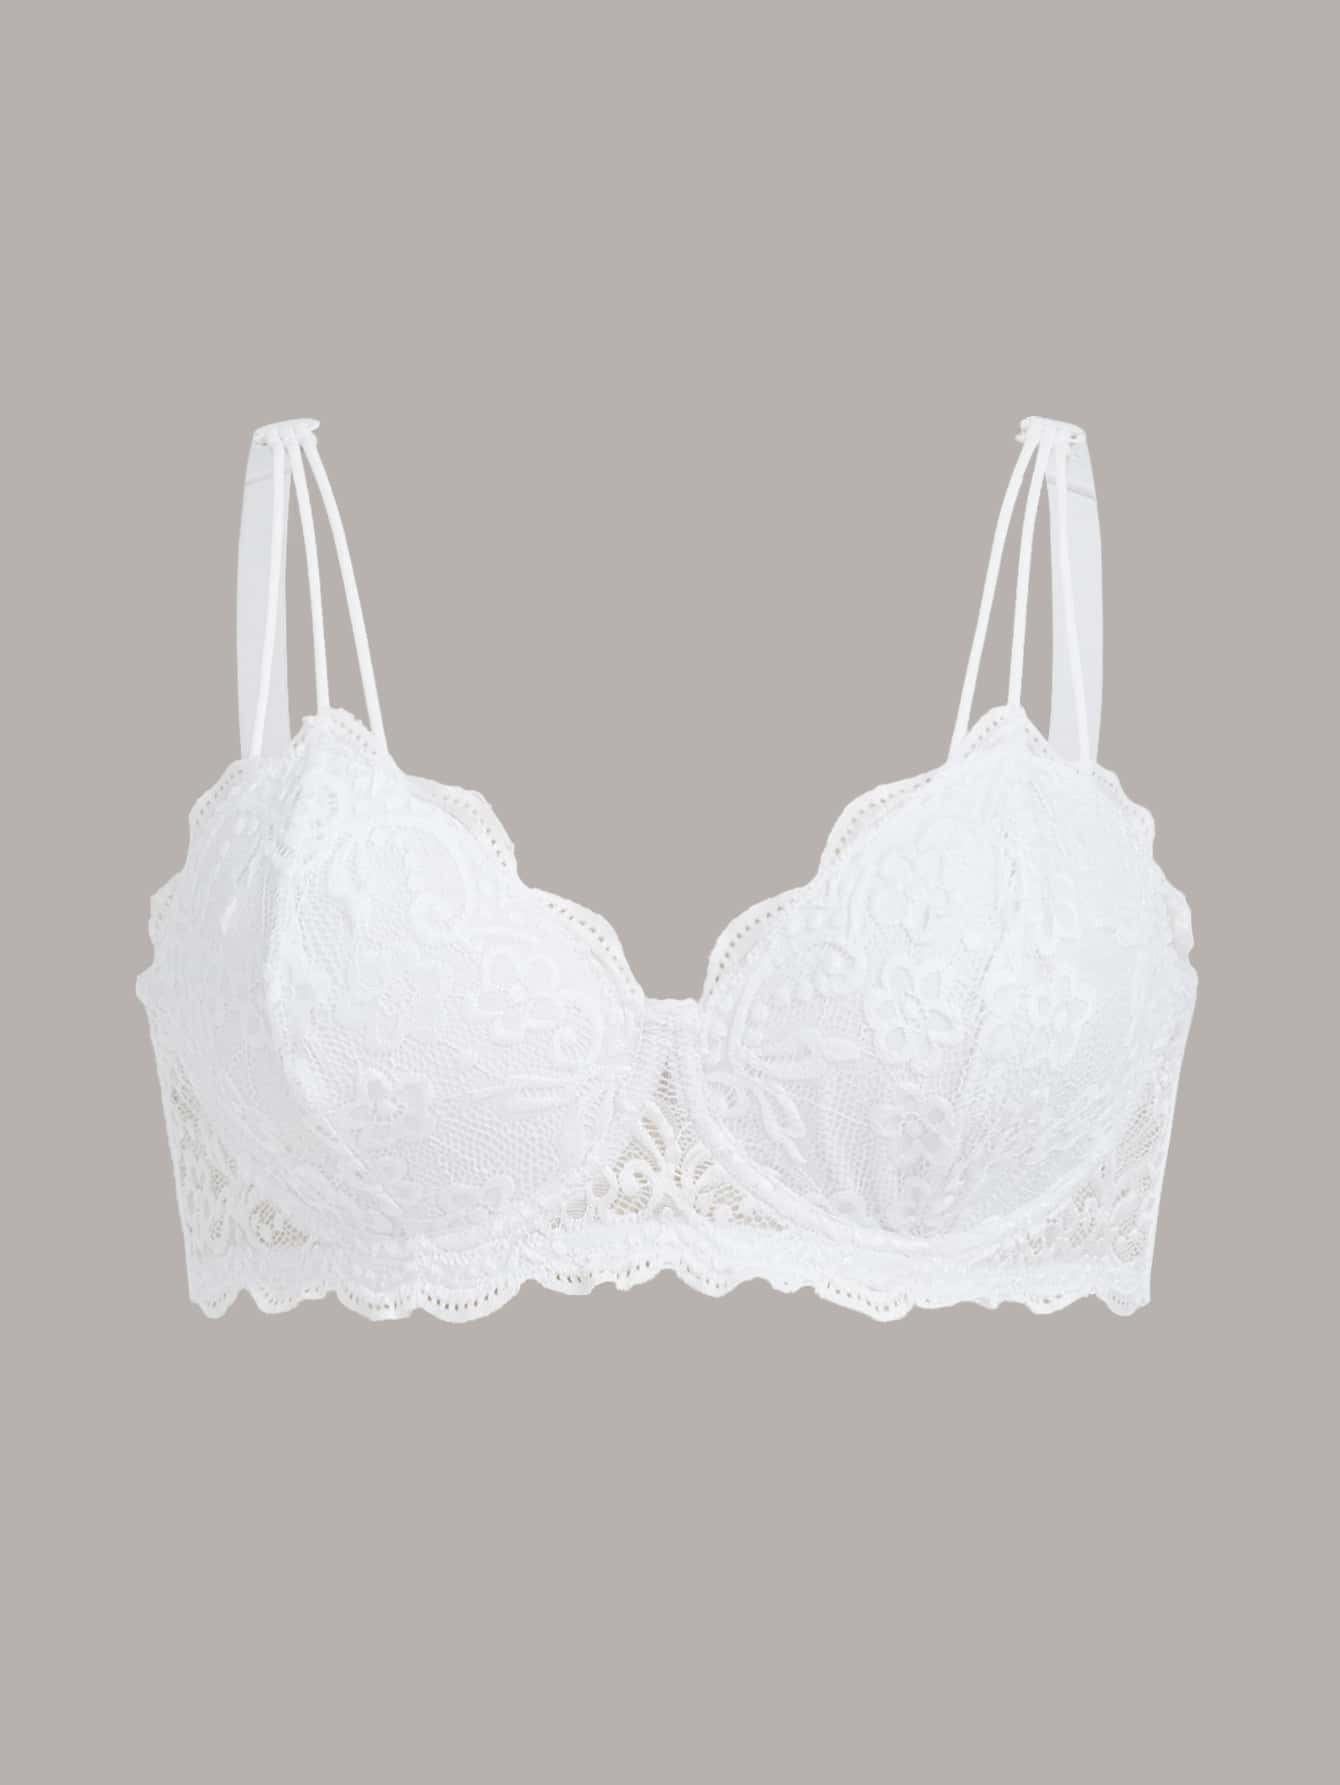 Zara White Border Lace Bras 36C-44DD - Plus Size Bra - Plus Sizes